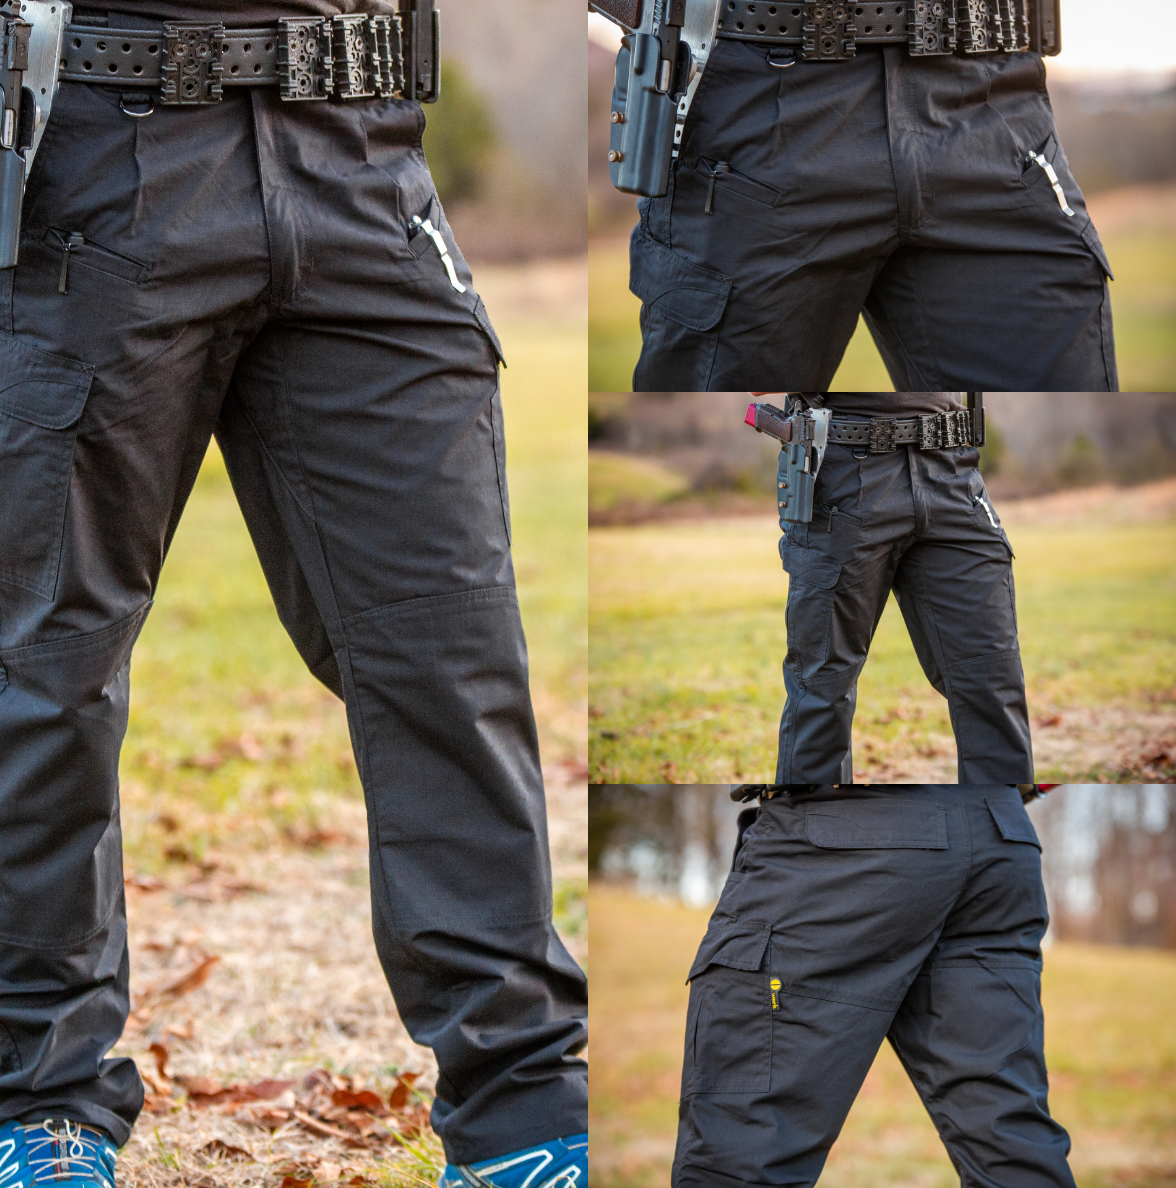 Best non-tactical tactical pants? : r/tacticalgear